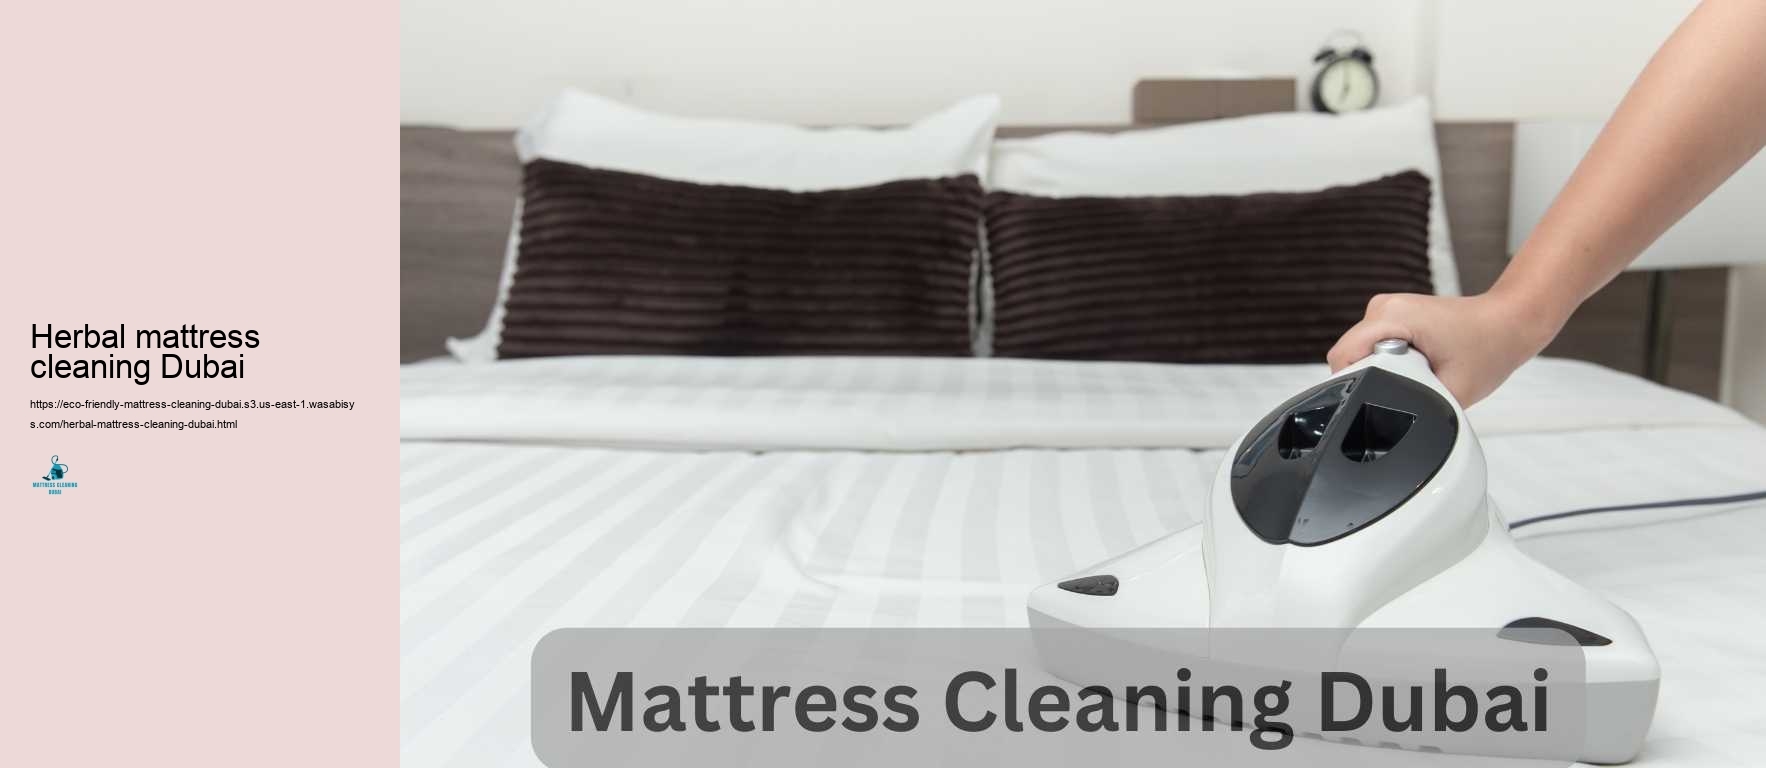 Herbal mattress cleaning Dubai